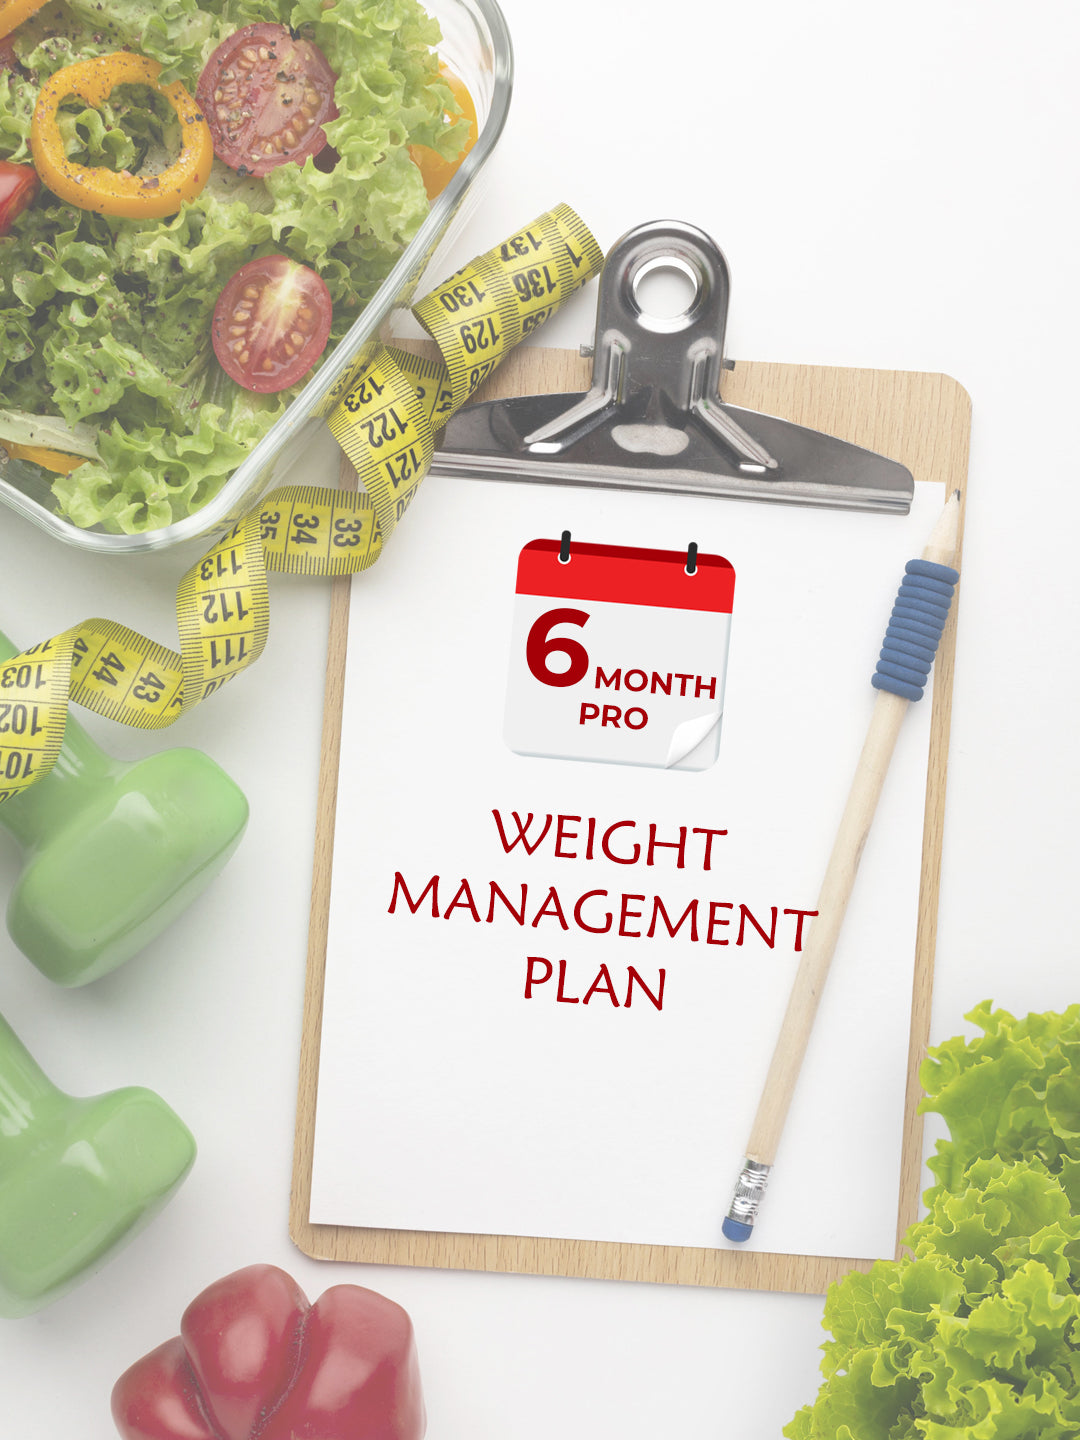 Weight Management Plan - 6 Month Plan